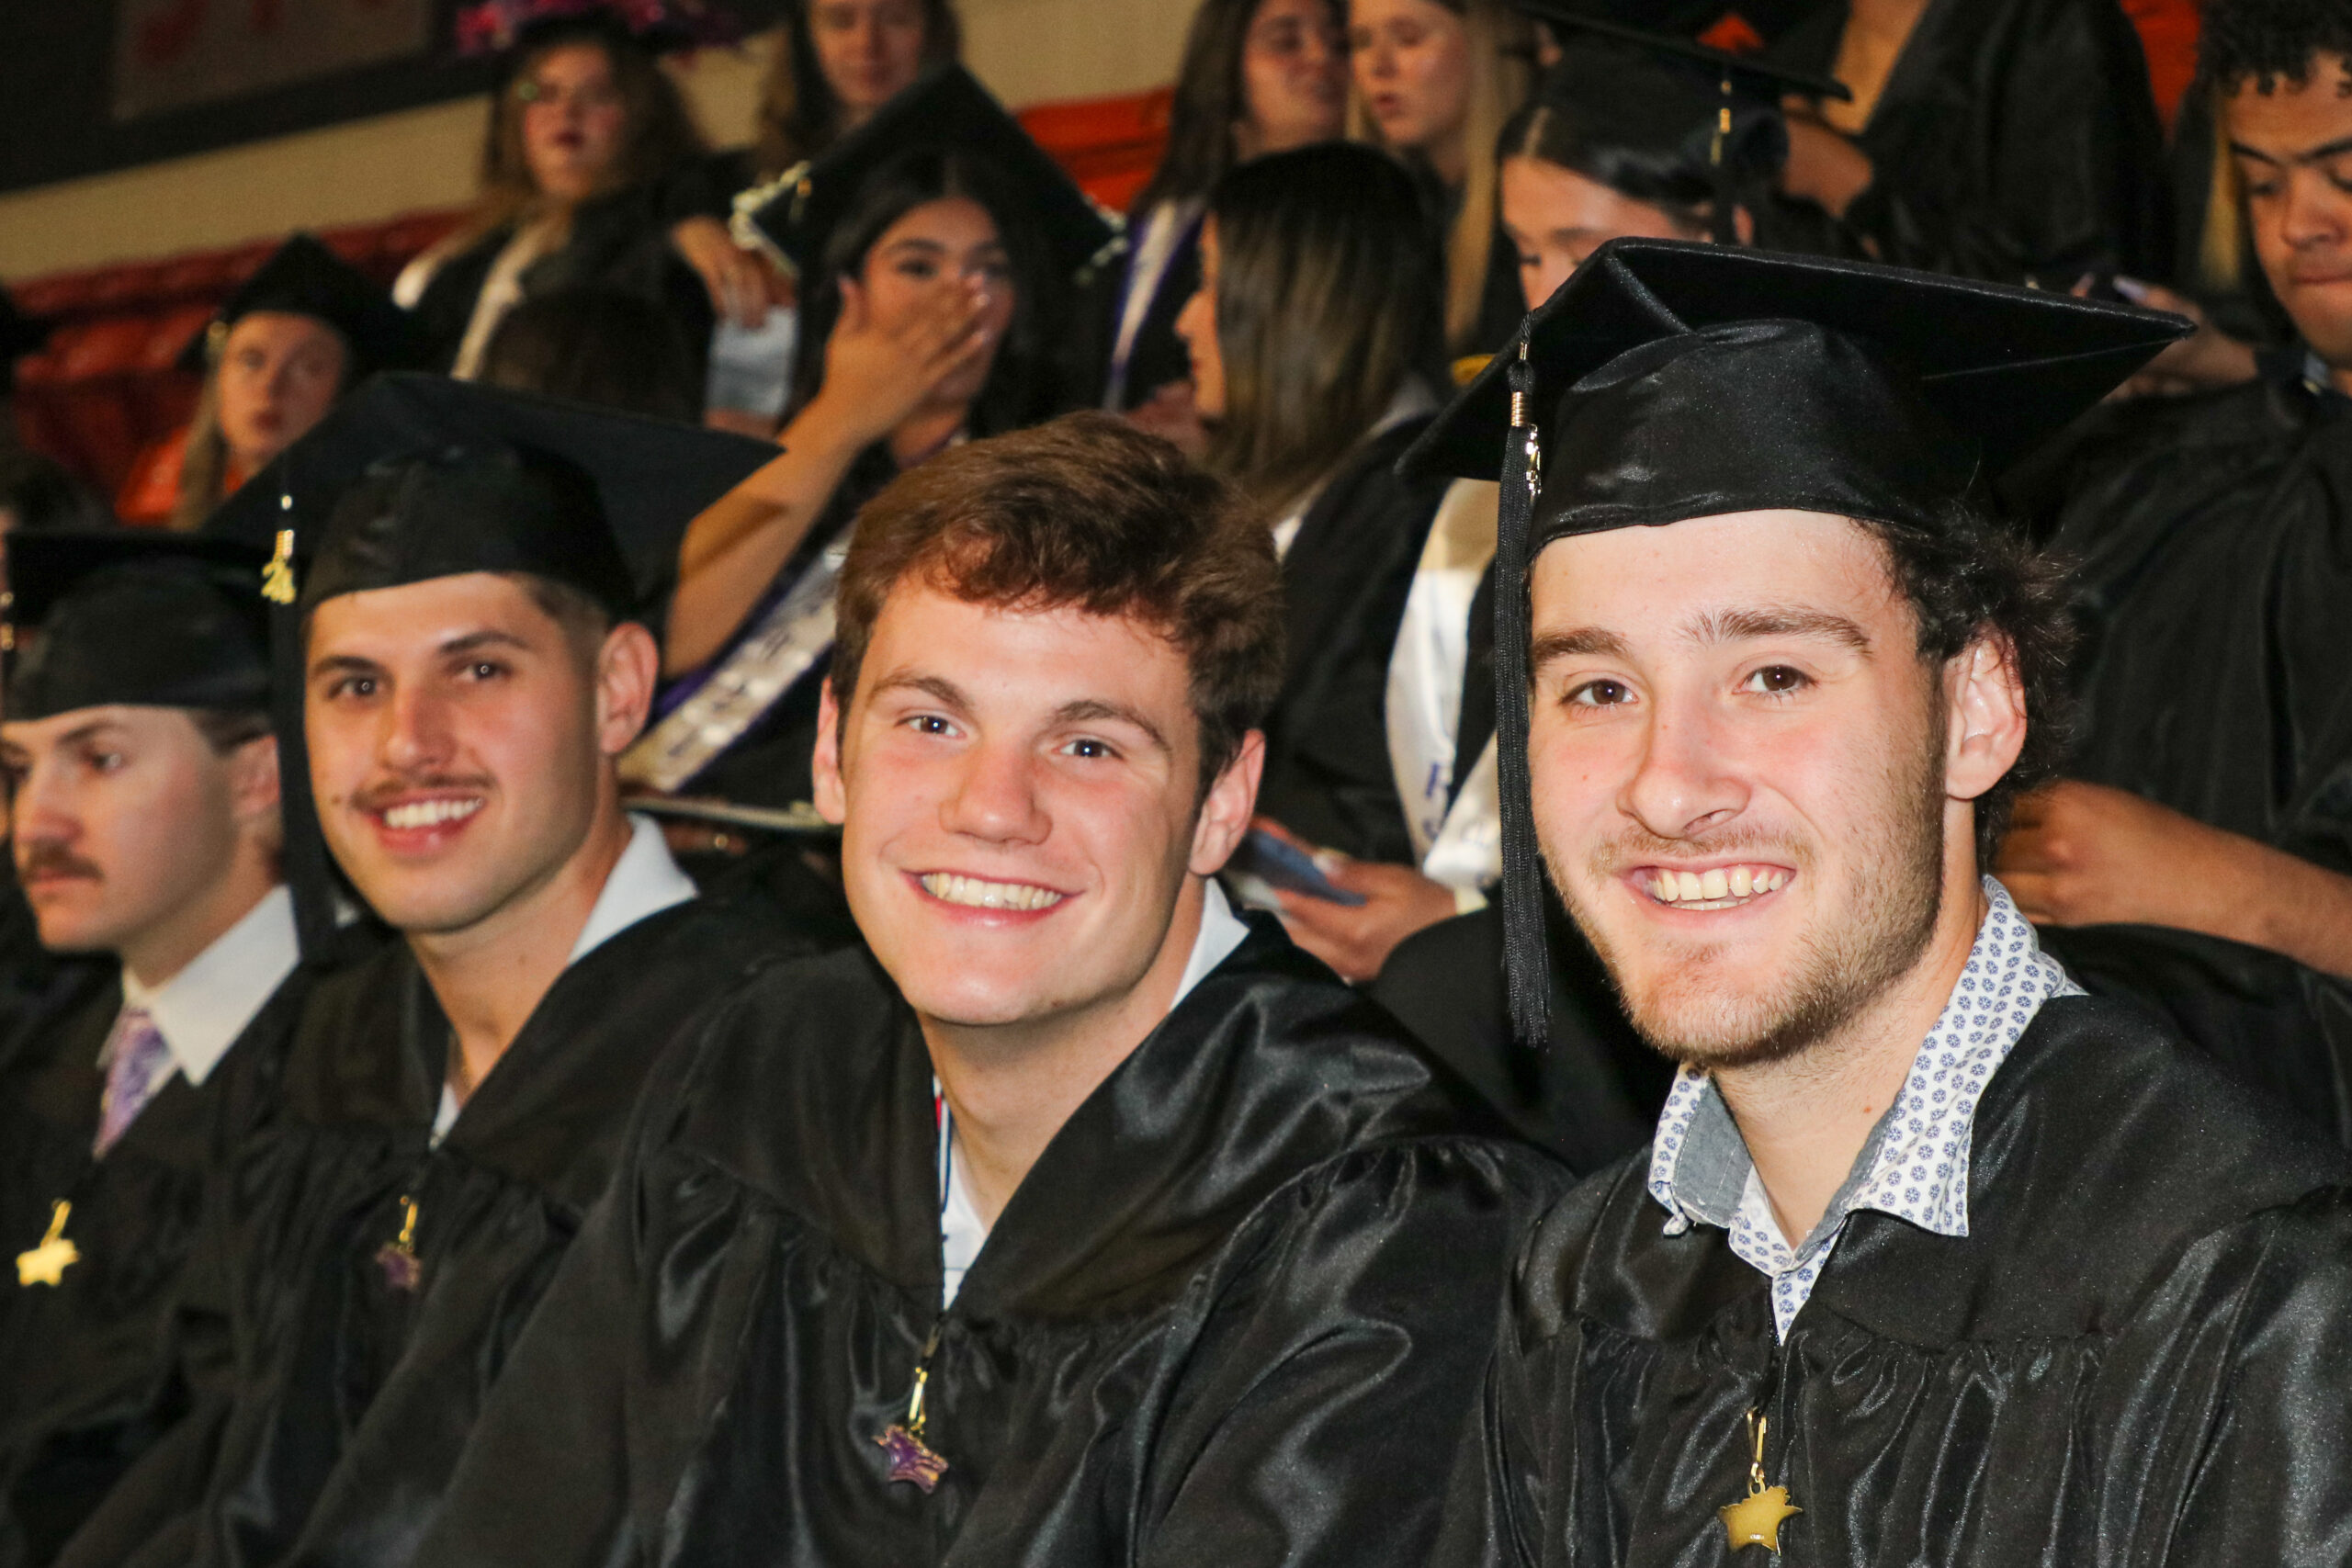 Group of men in graduation attire